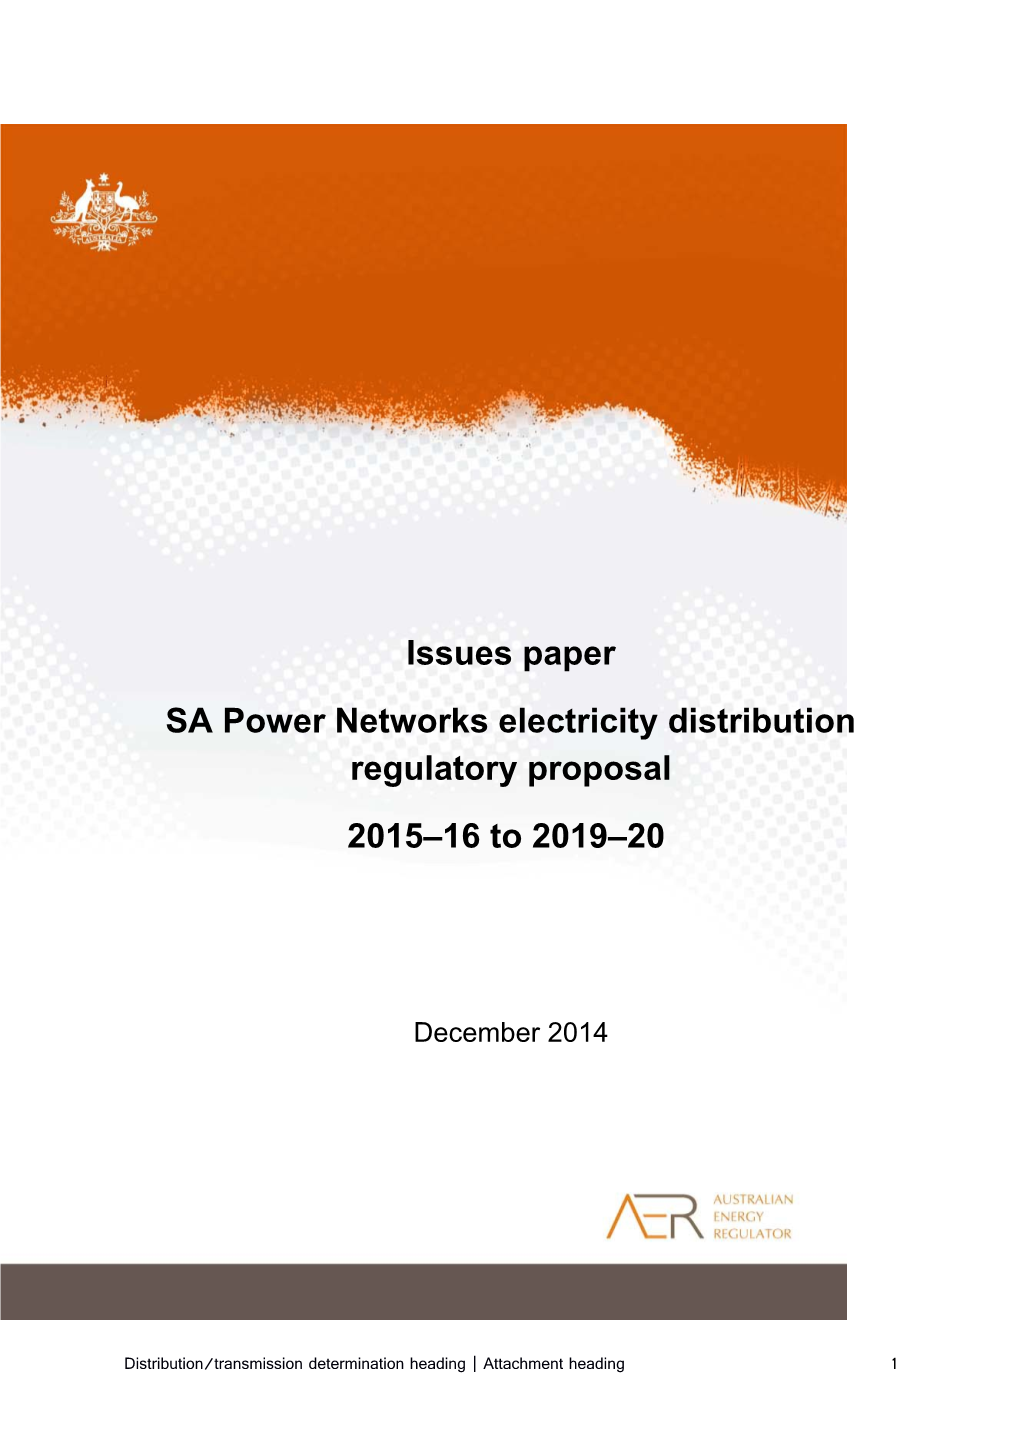 SA Power Networks Electricity Distribution Regulatory Proposal